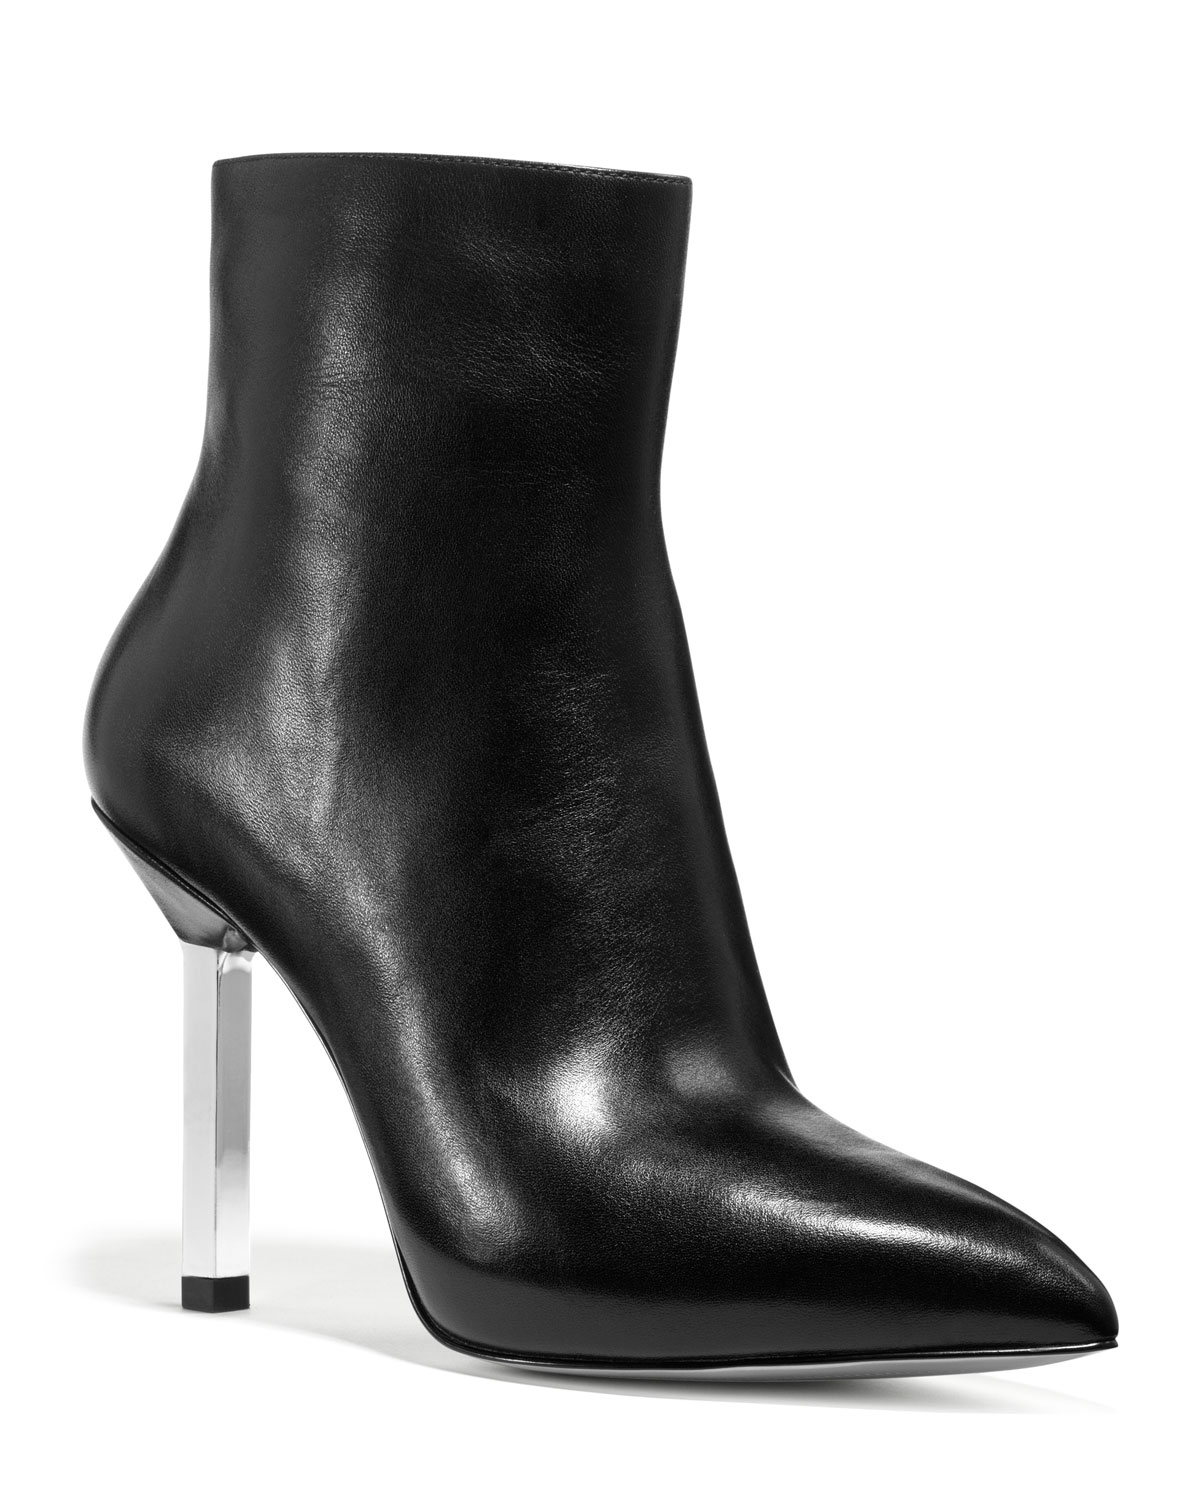 Lyst - Michael Kors Michael Sonja Leather Boot in Black